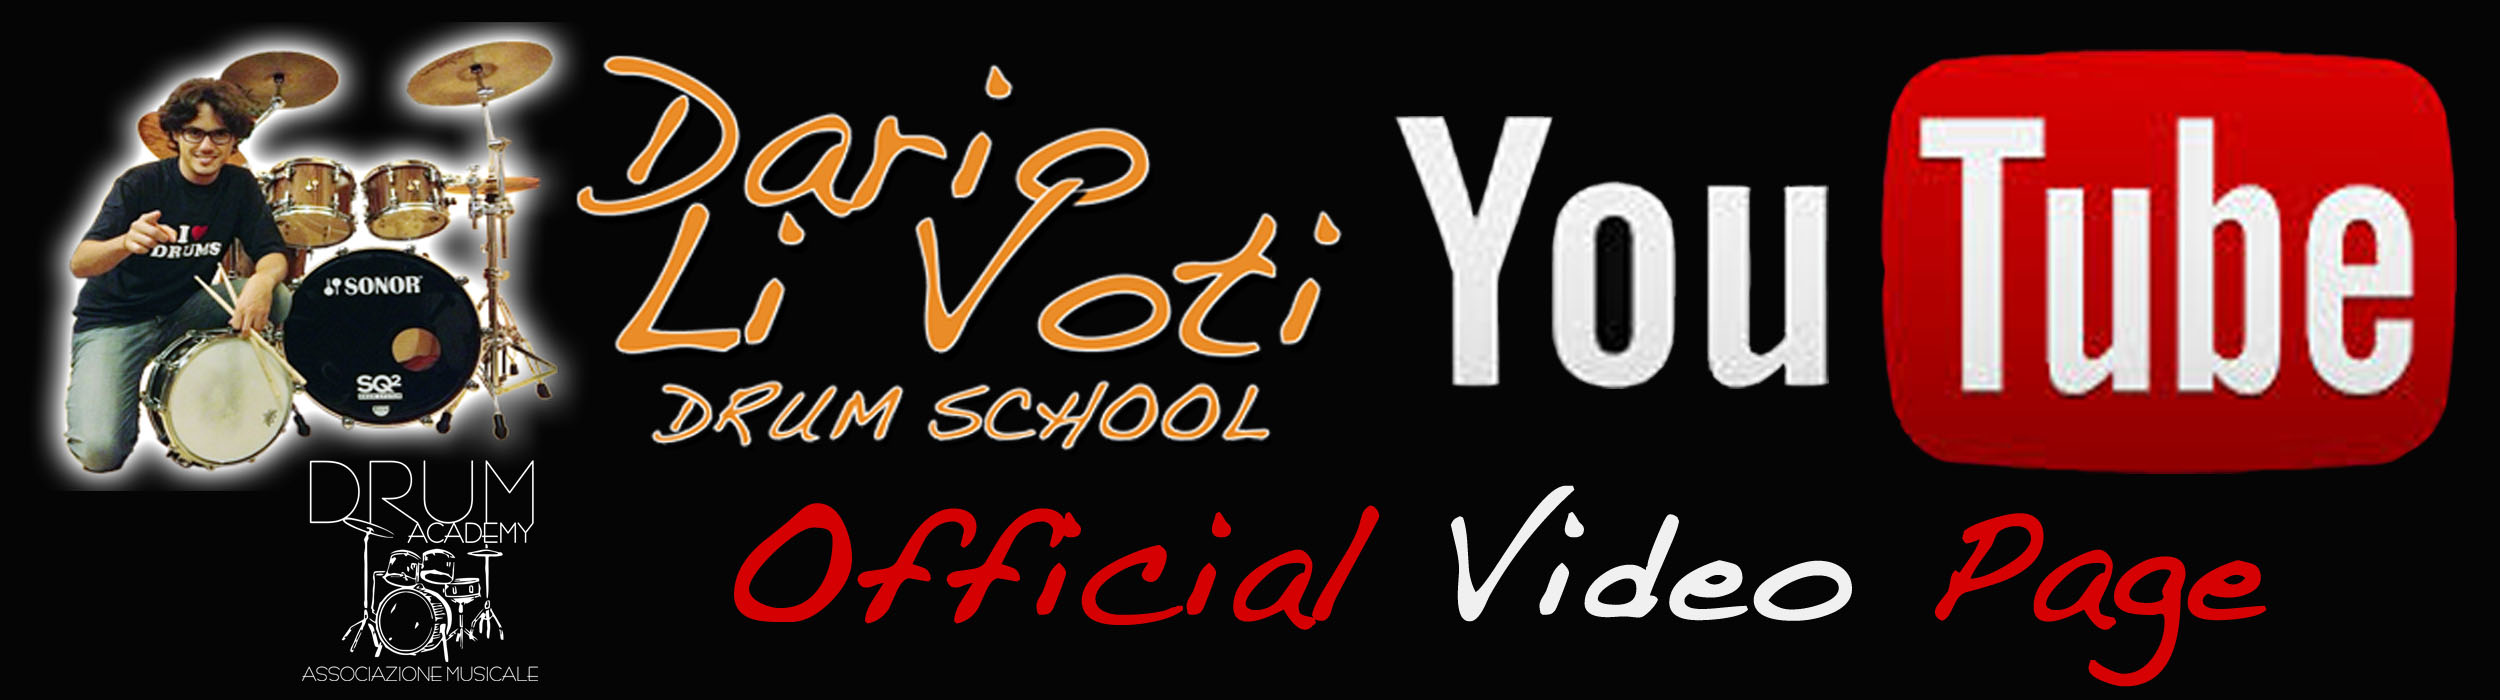  - logo dlv drum school youtube